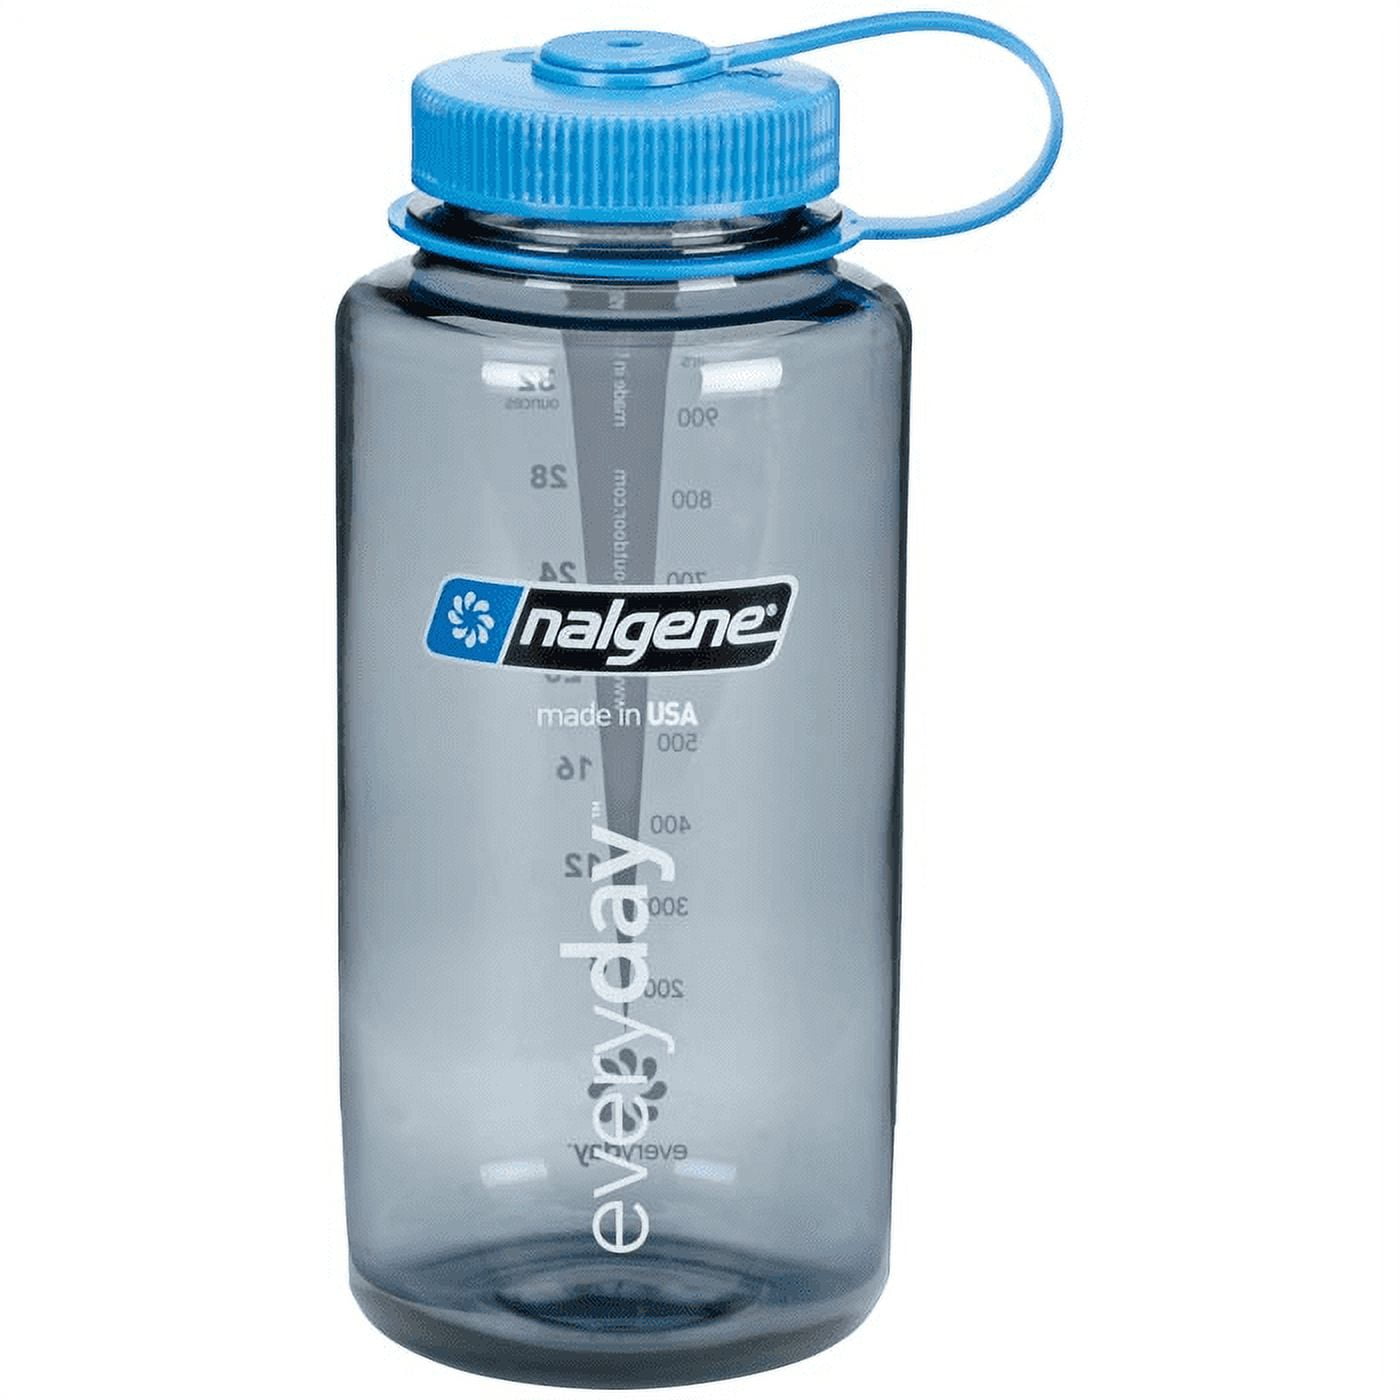 Бутылка для воды 1 литр. Nalgene бутылка для воды everyday 32oz WM 1 Л. Бутылка Nalgene everyday Gray, 1 л.. Nalgene 1л сталь. Nalgene 1л Stainless.